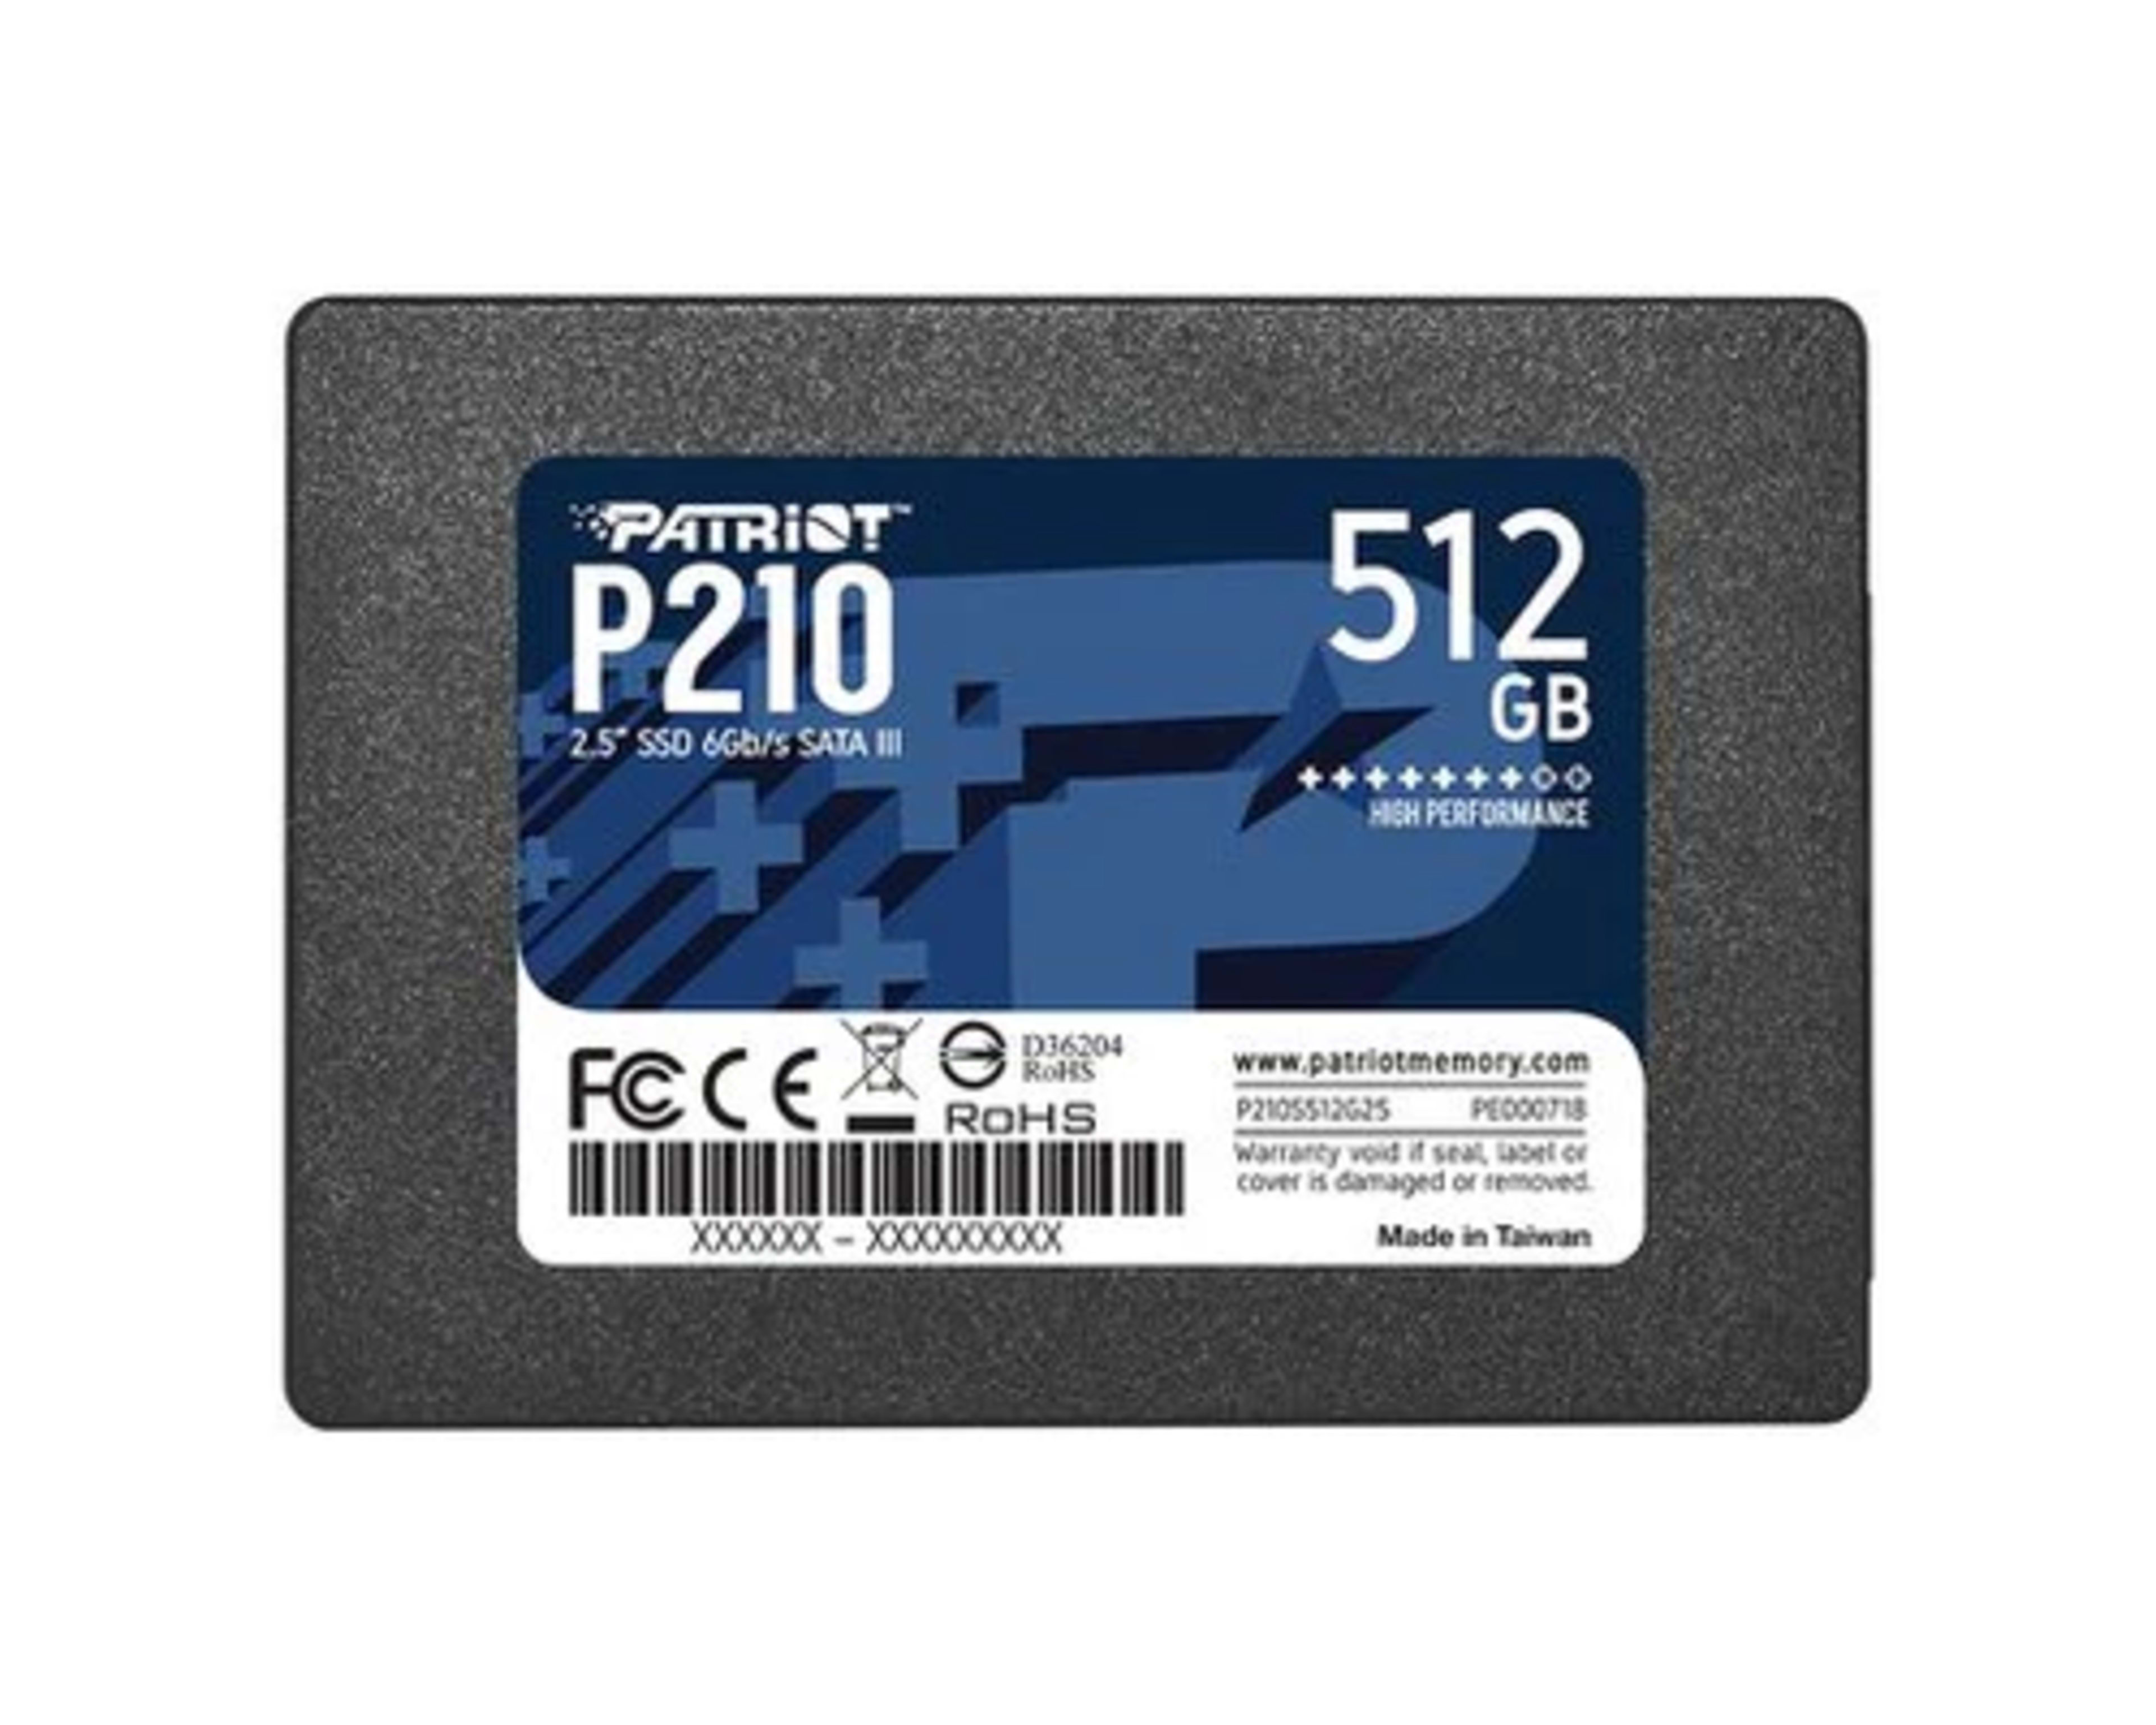 Patriot P210 512GB Internal SSD - SATA 3 2.5" - Solid State Drive